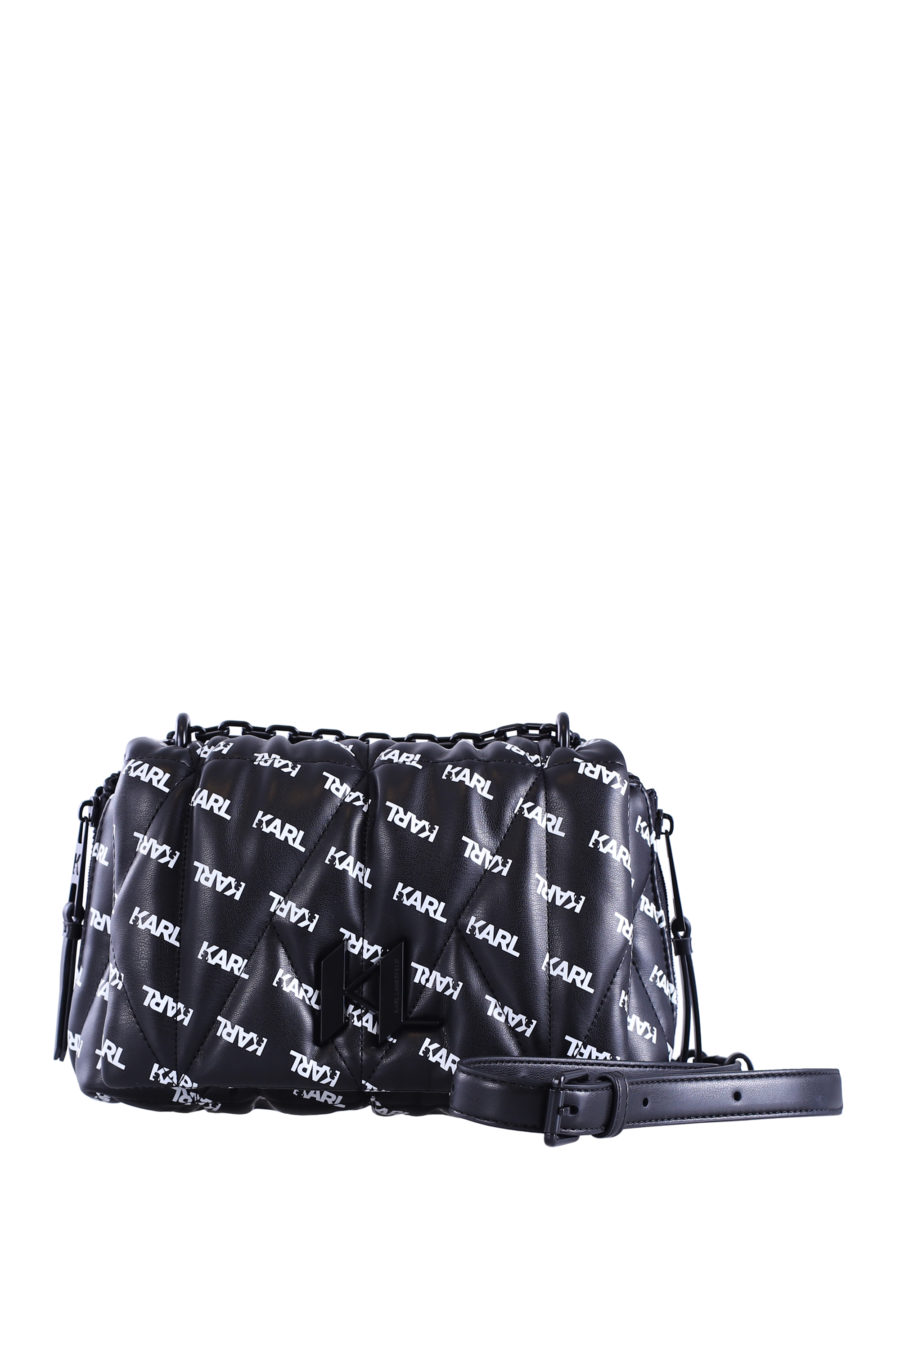 Bolso bandolera negro con letras blancas - IMG 8975